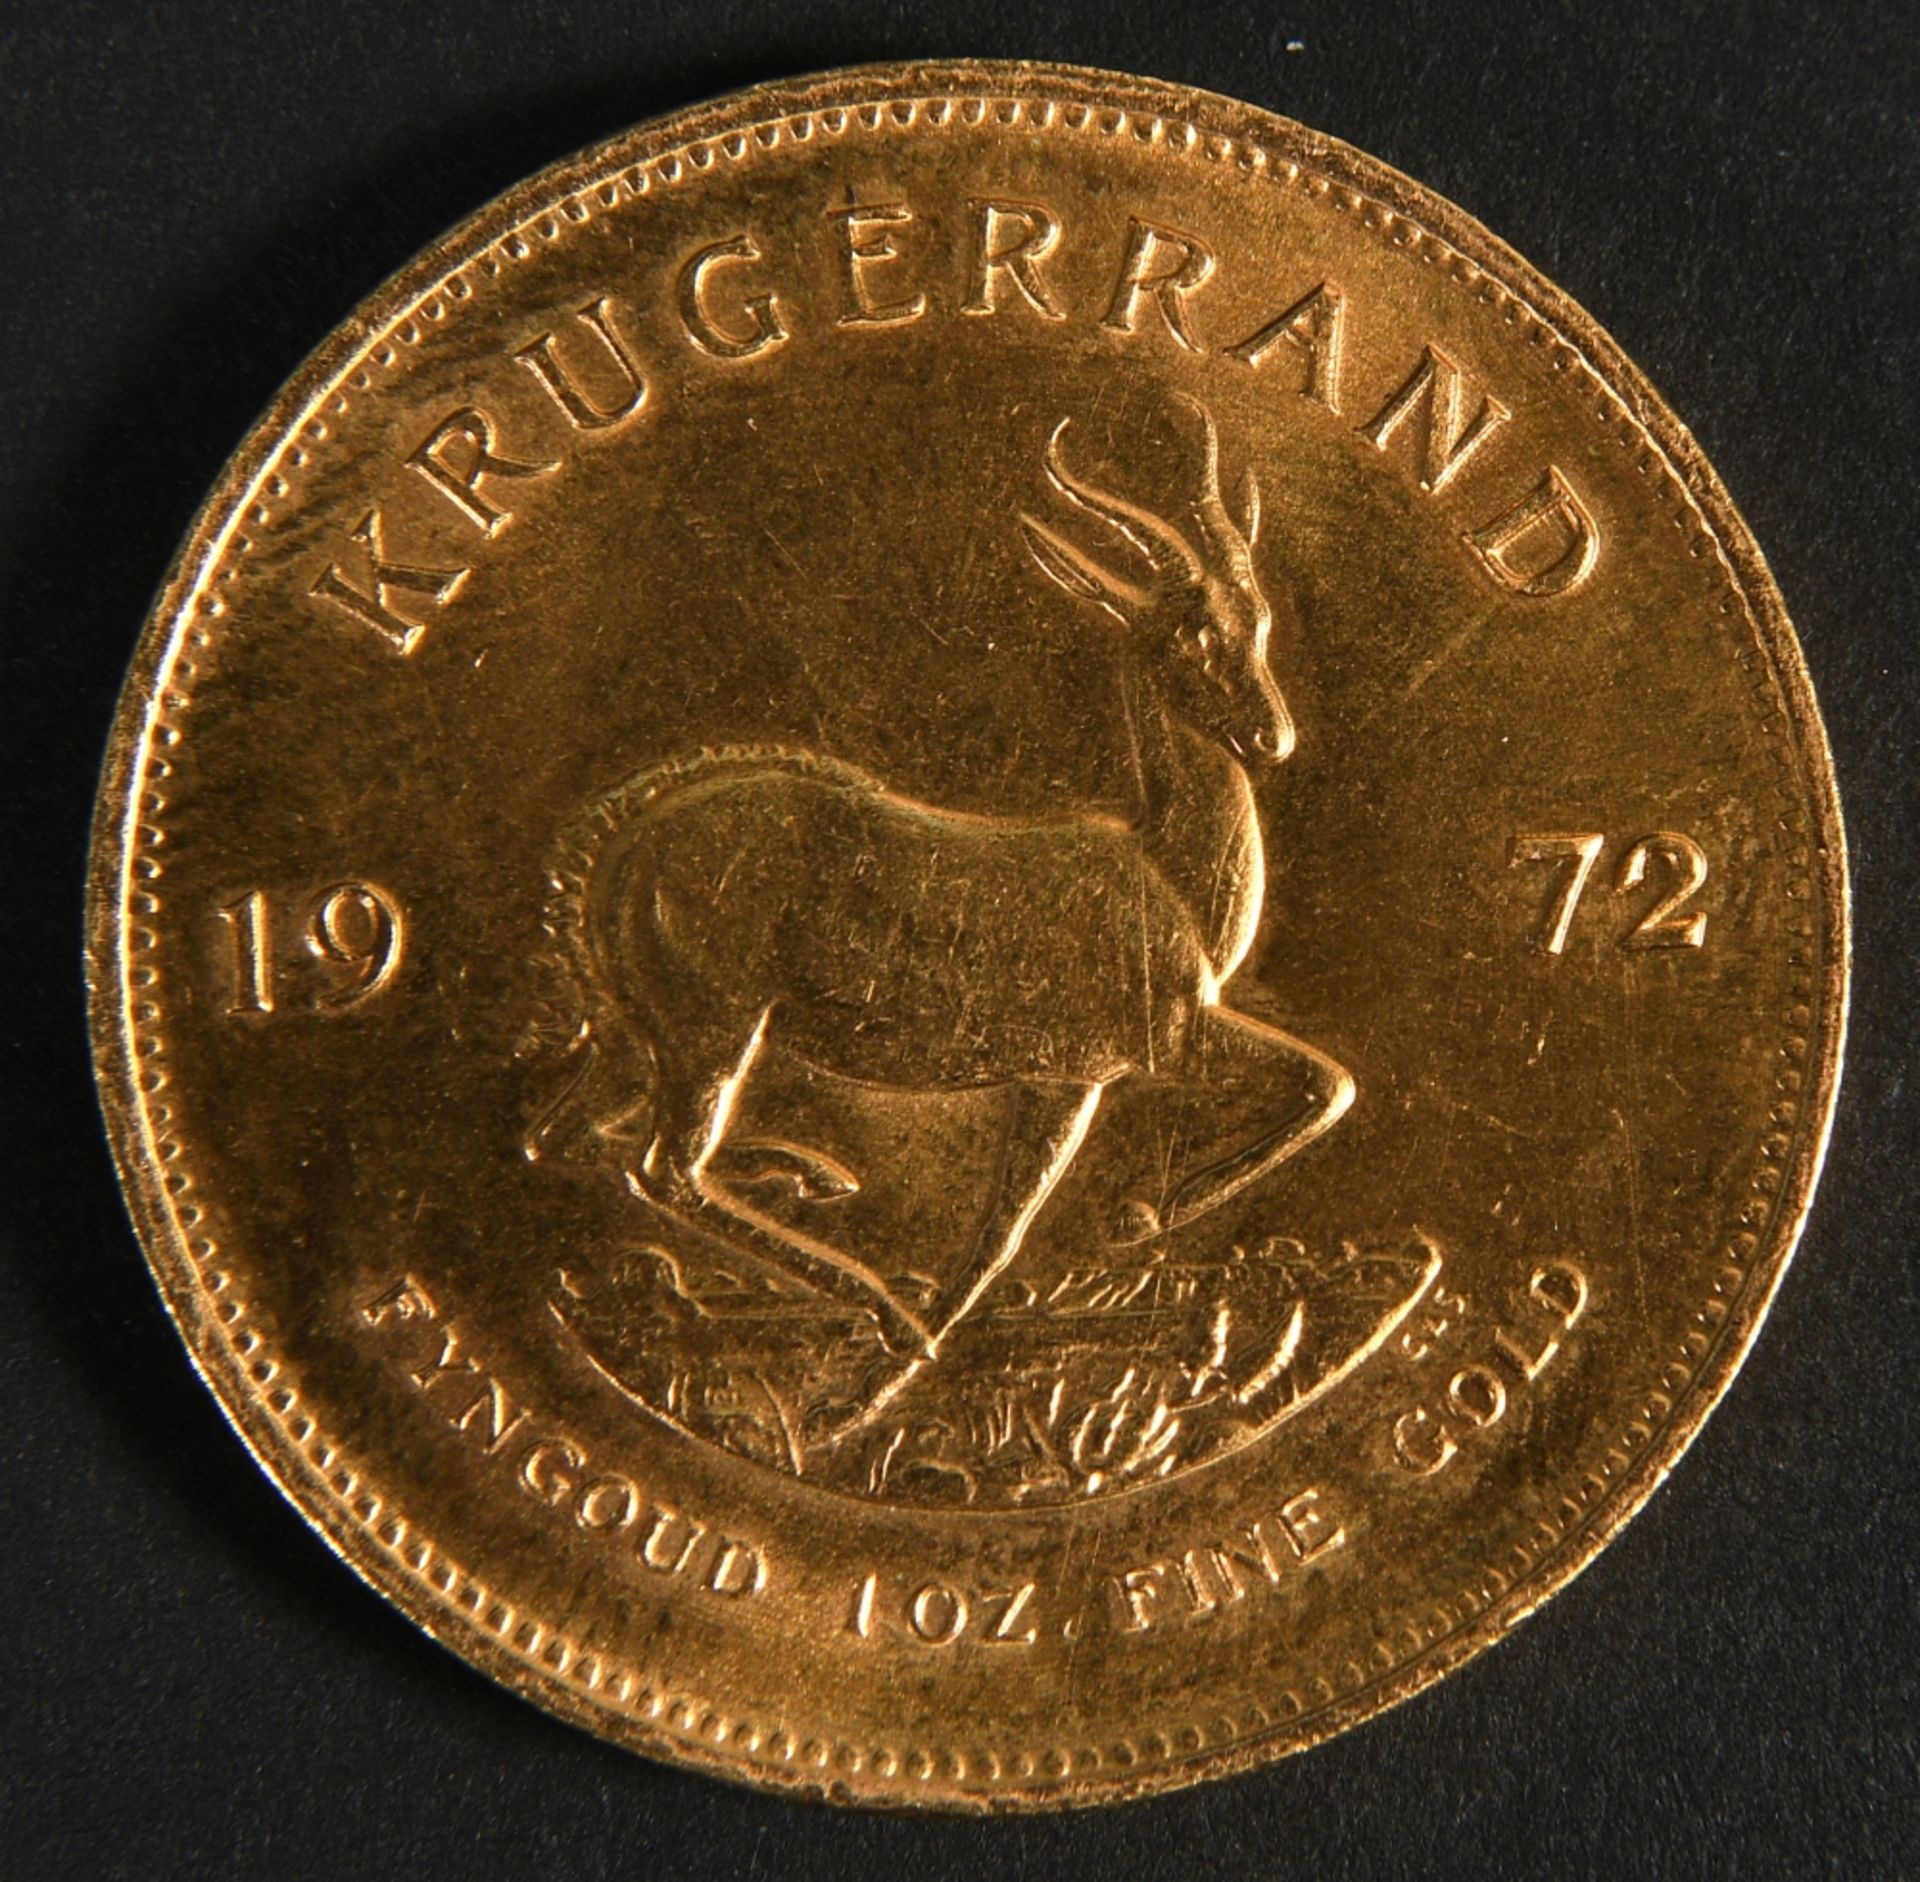 Münze - Goldmünze "Krügerrand 1972" - Image 2 of 3